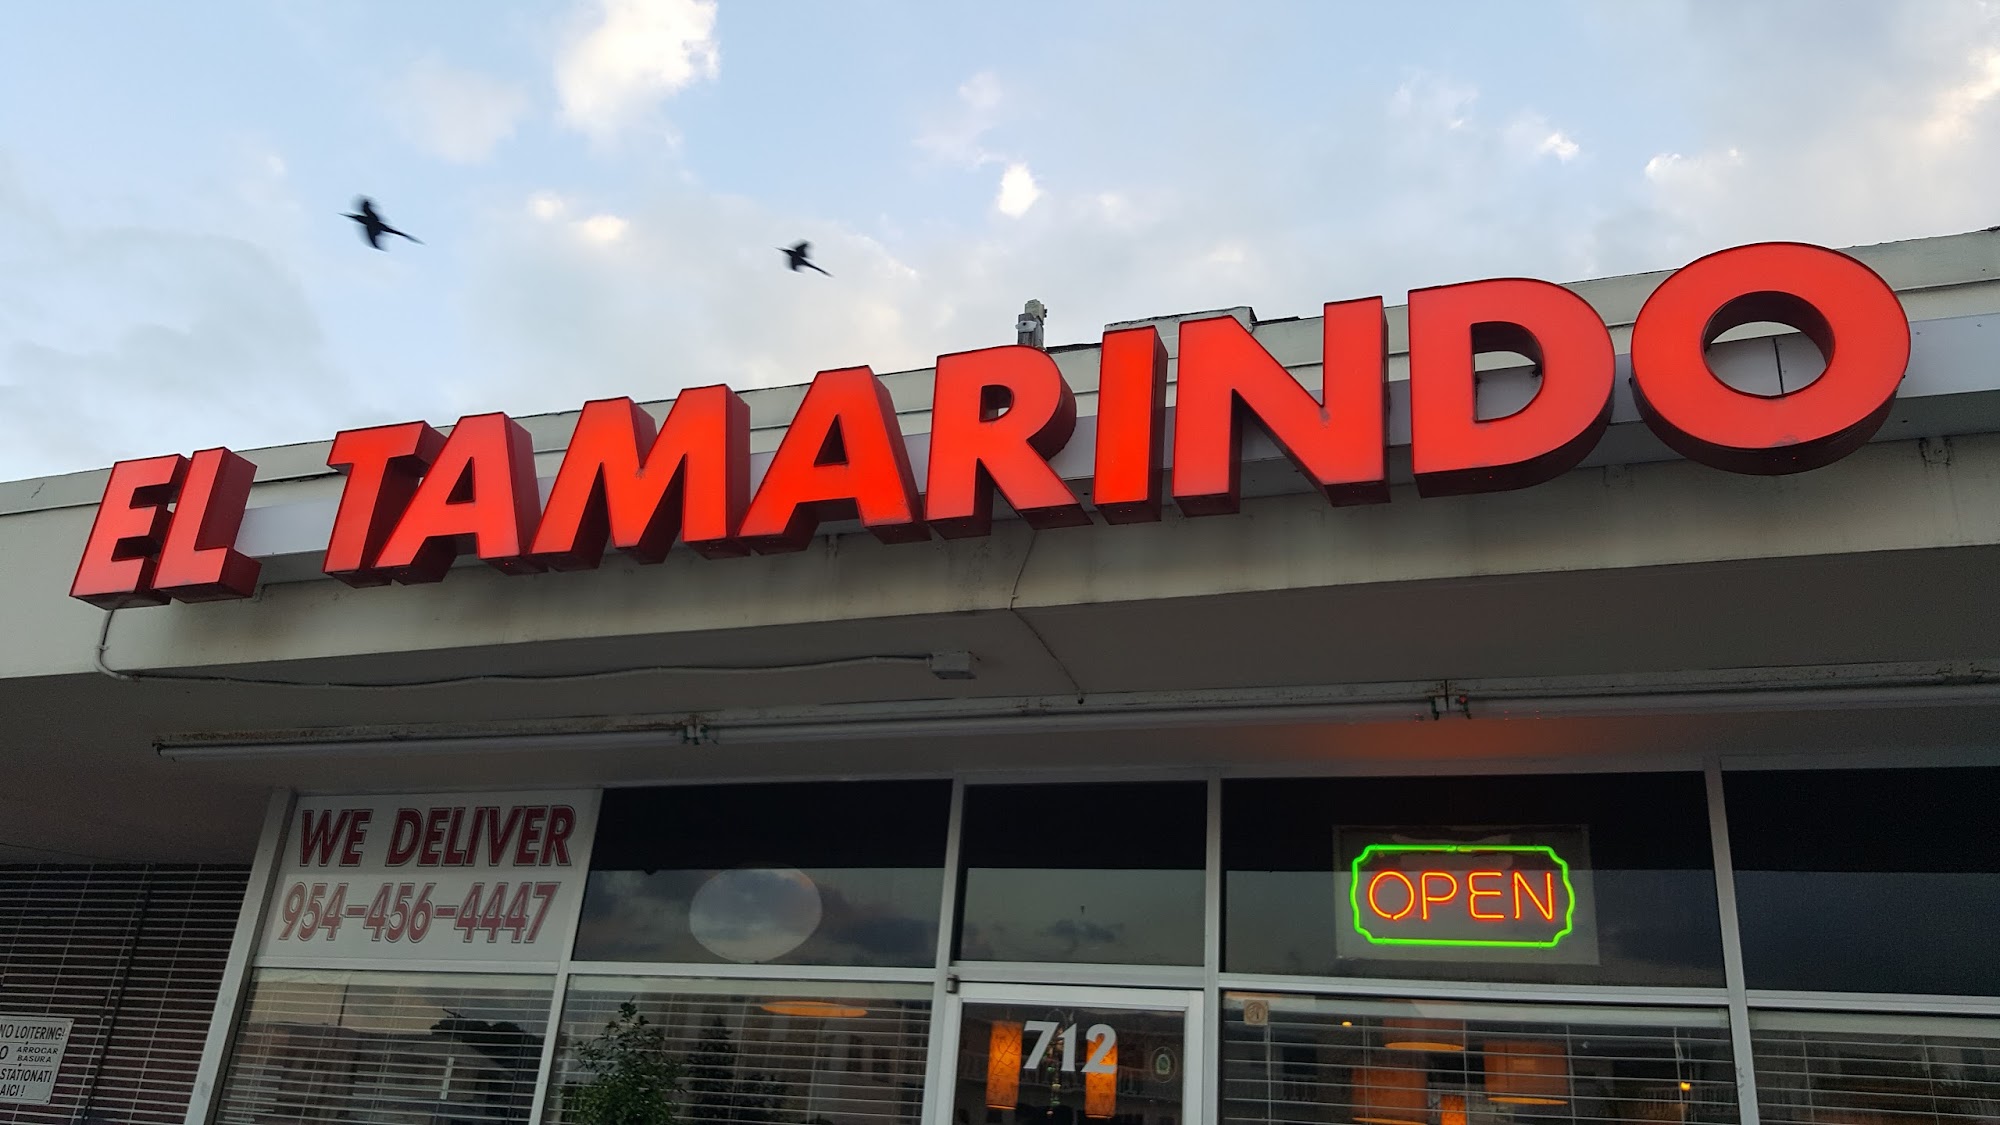 El Tamarindo Coal Fired Pizza